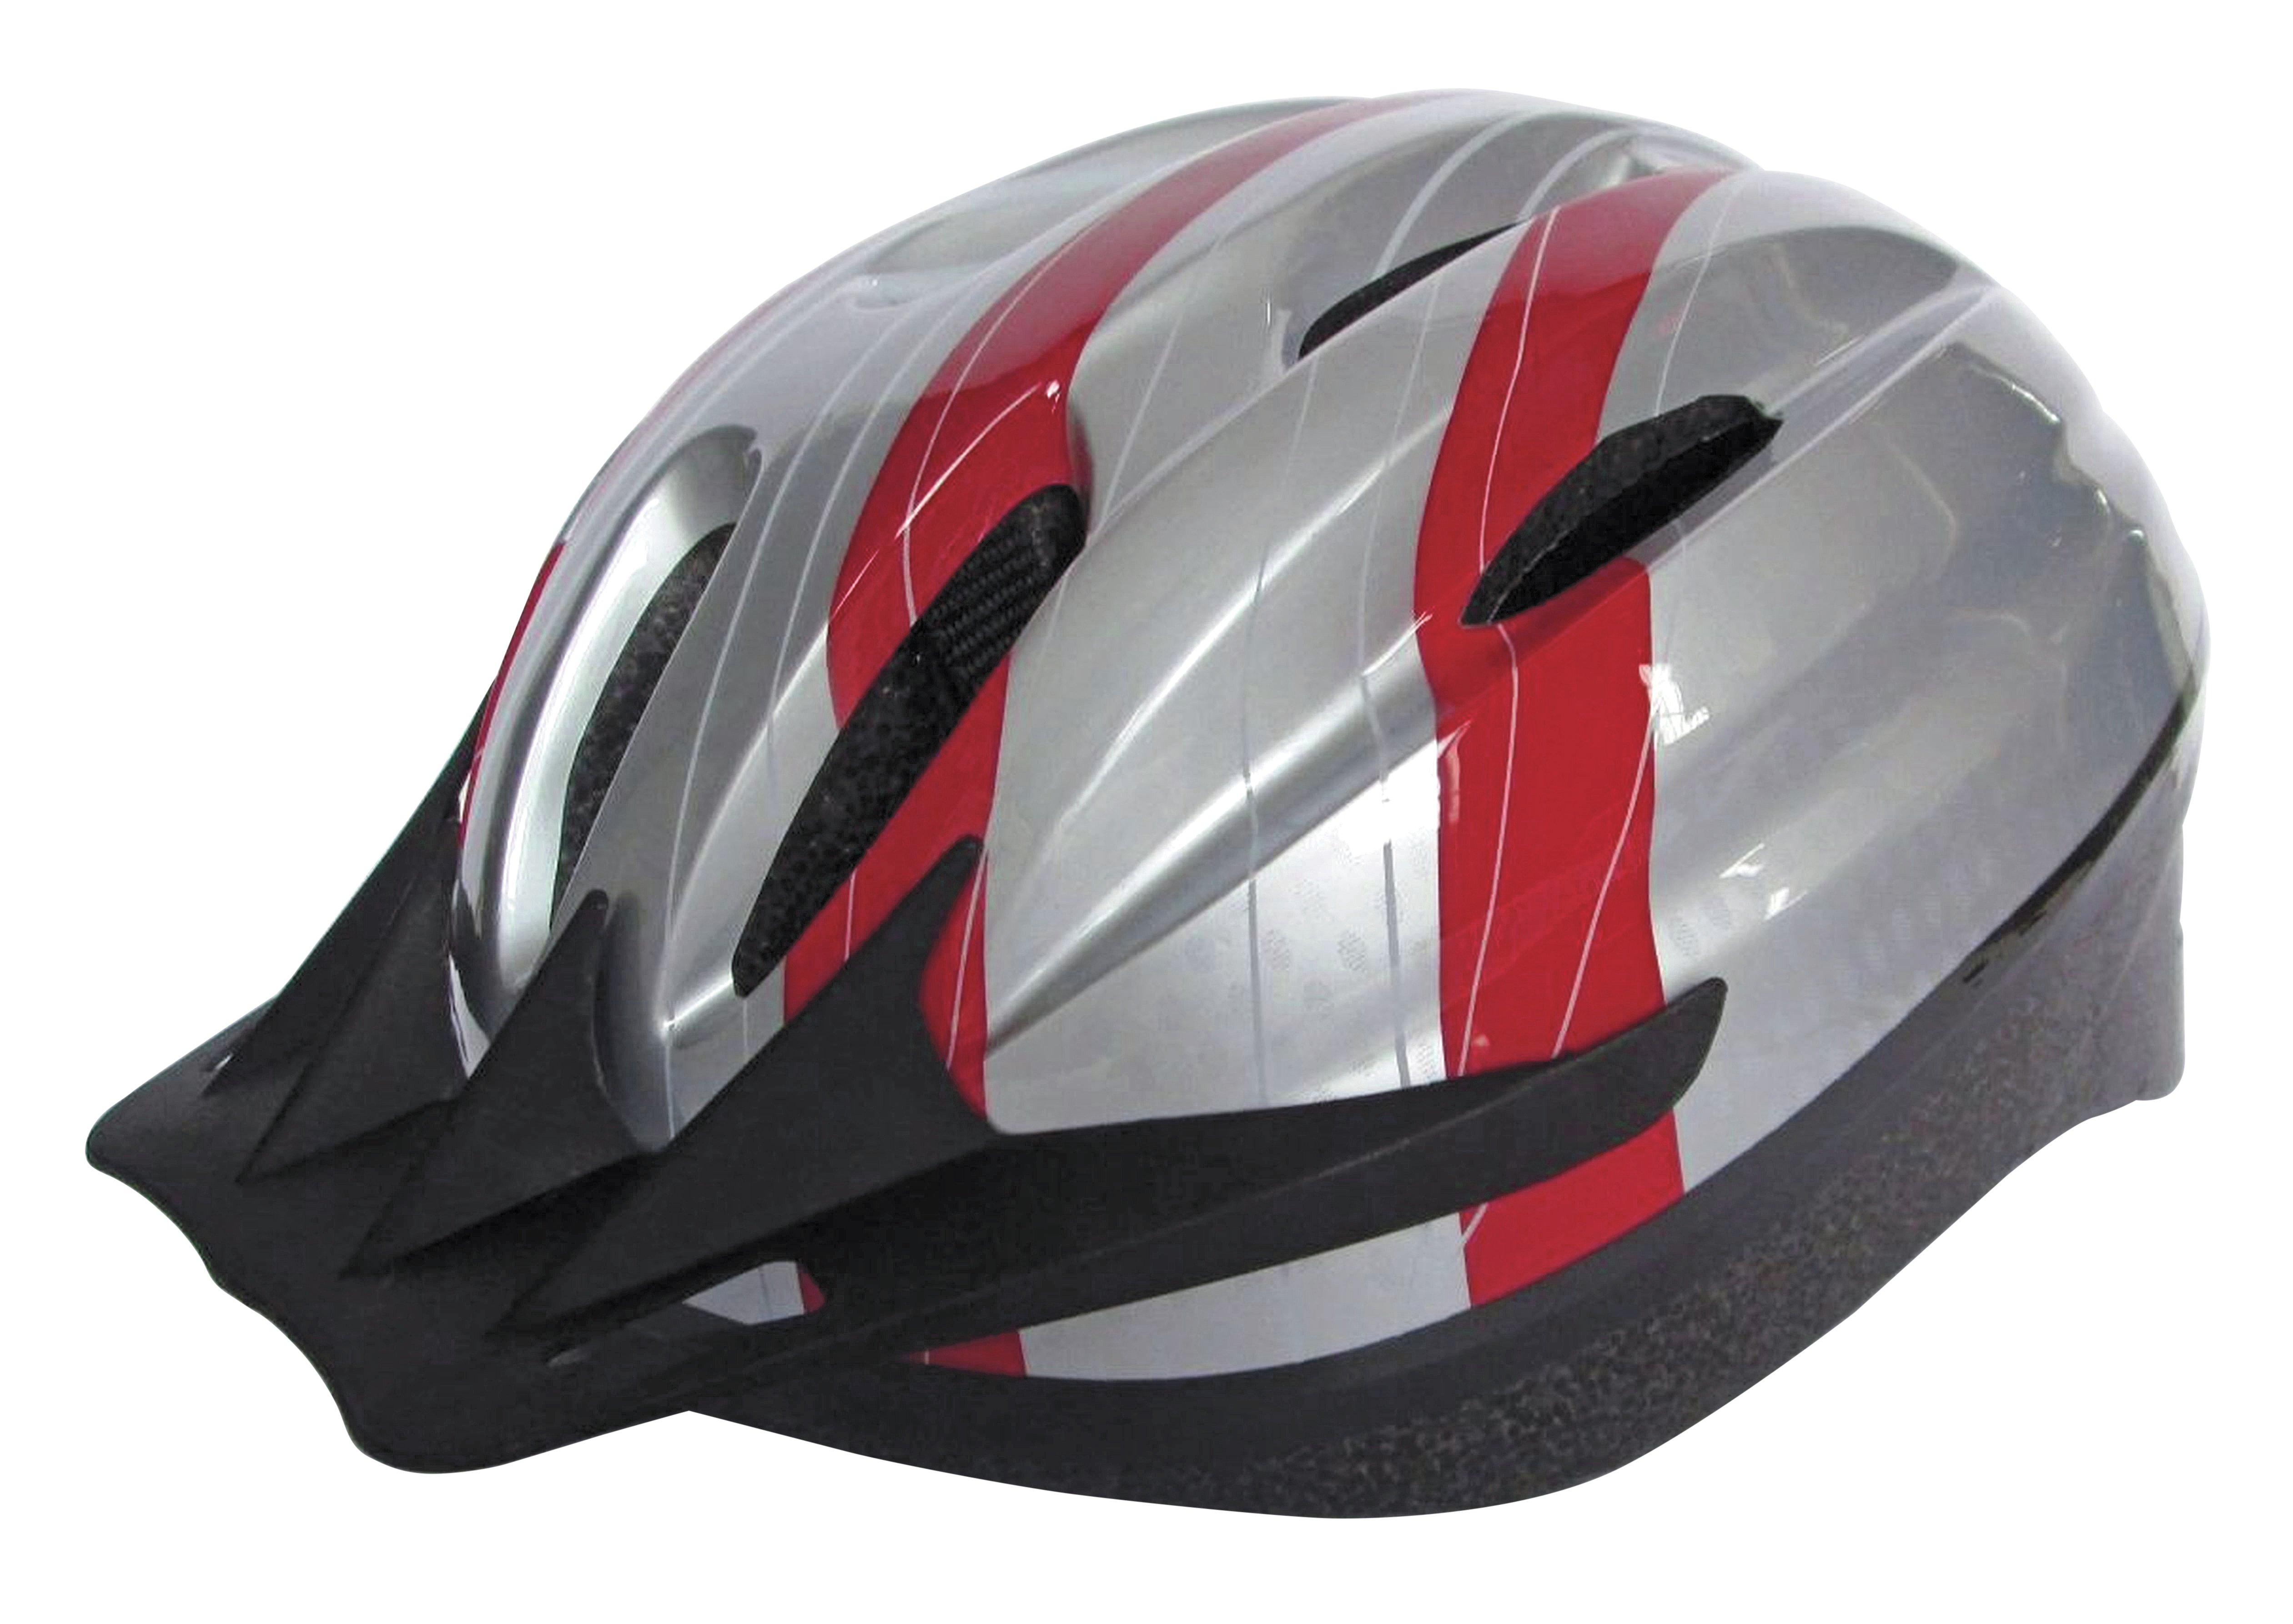 argos bike helmets